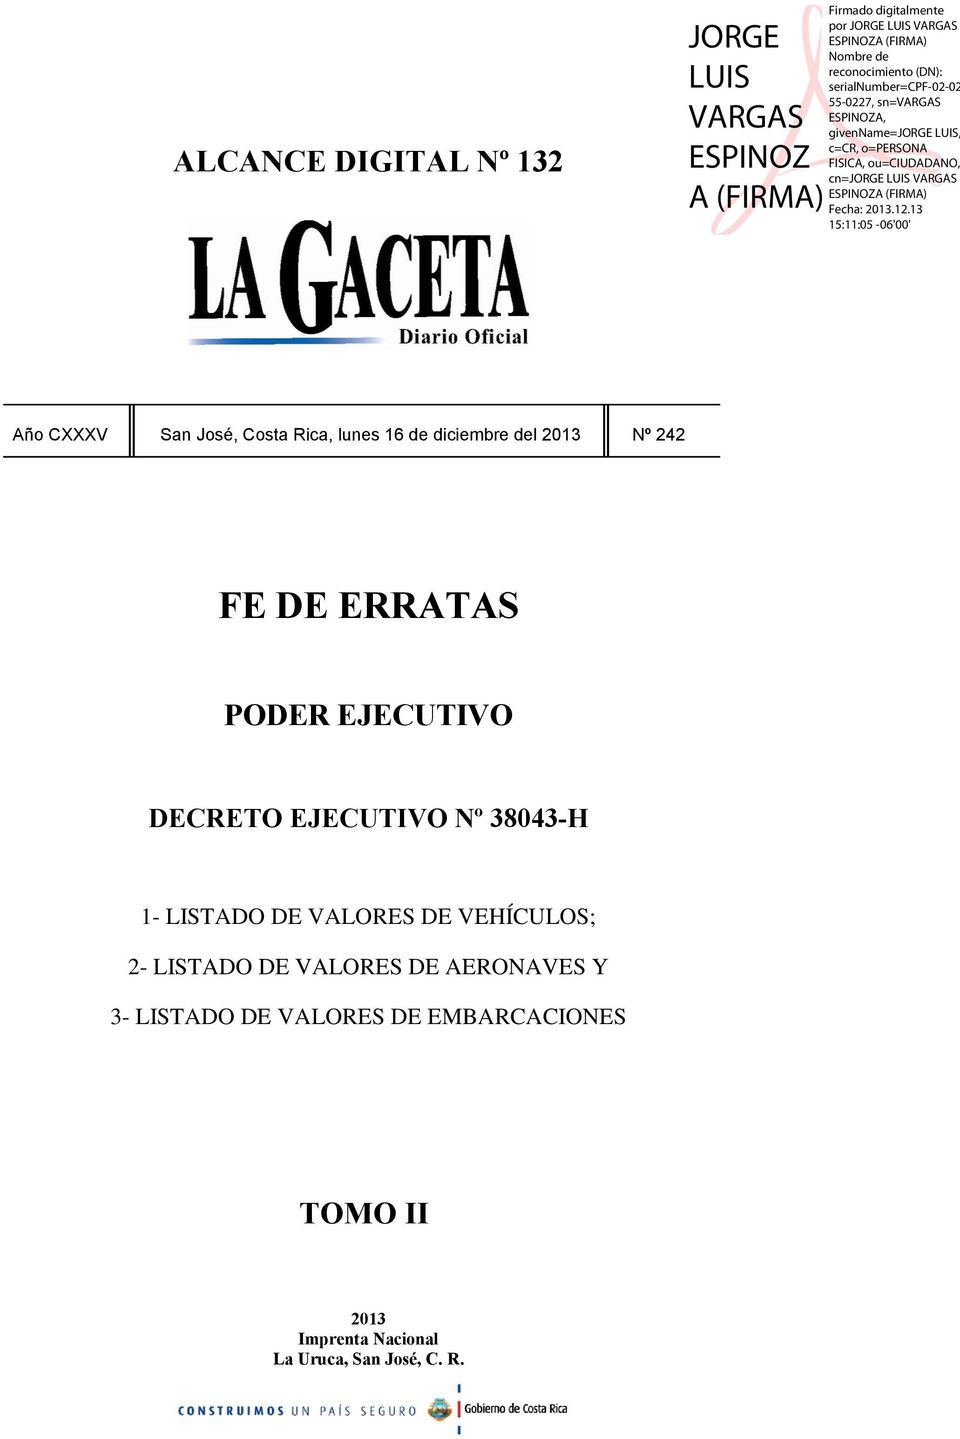 Imprenta Nacional La Uruca, San José, C. R.